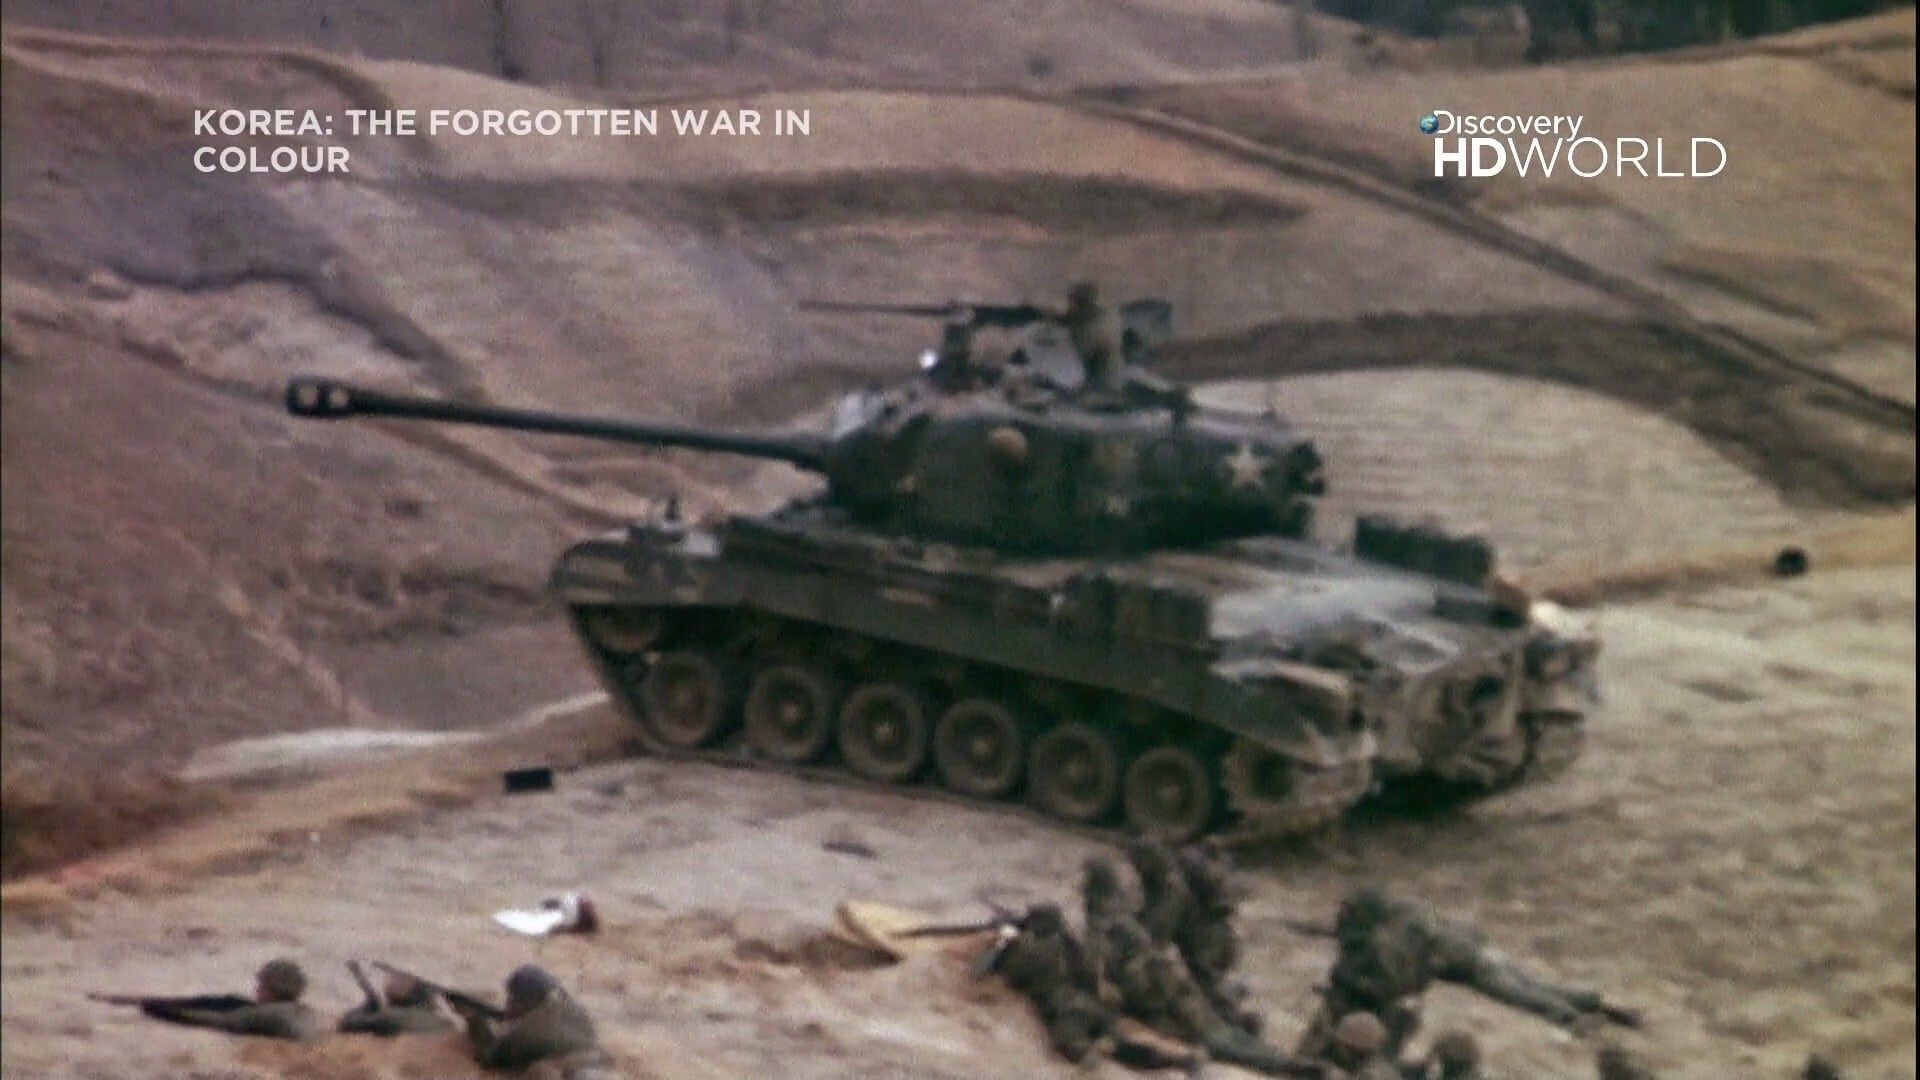 Korea: The Forgotten War in Colour background